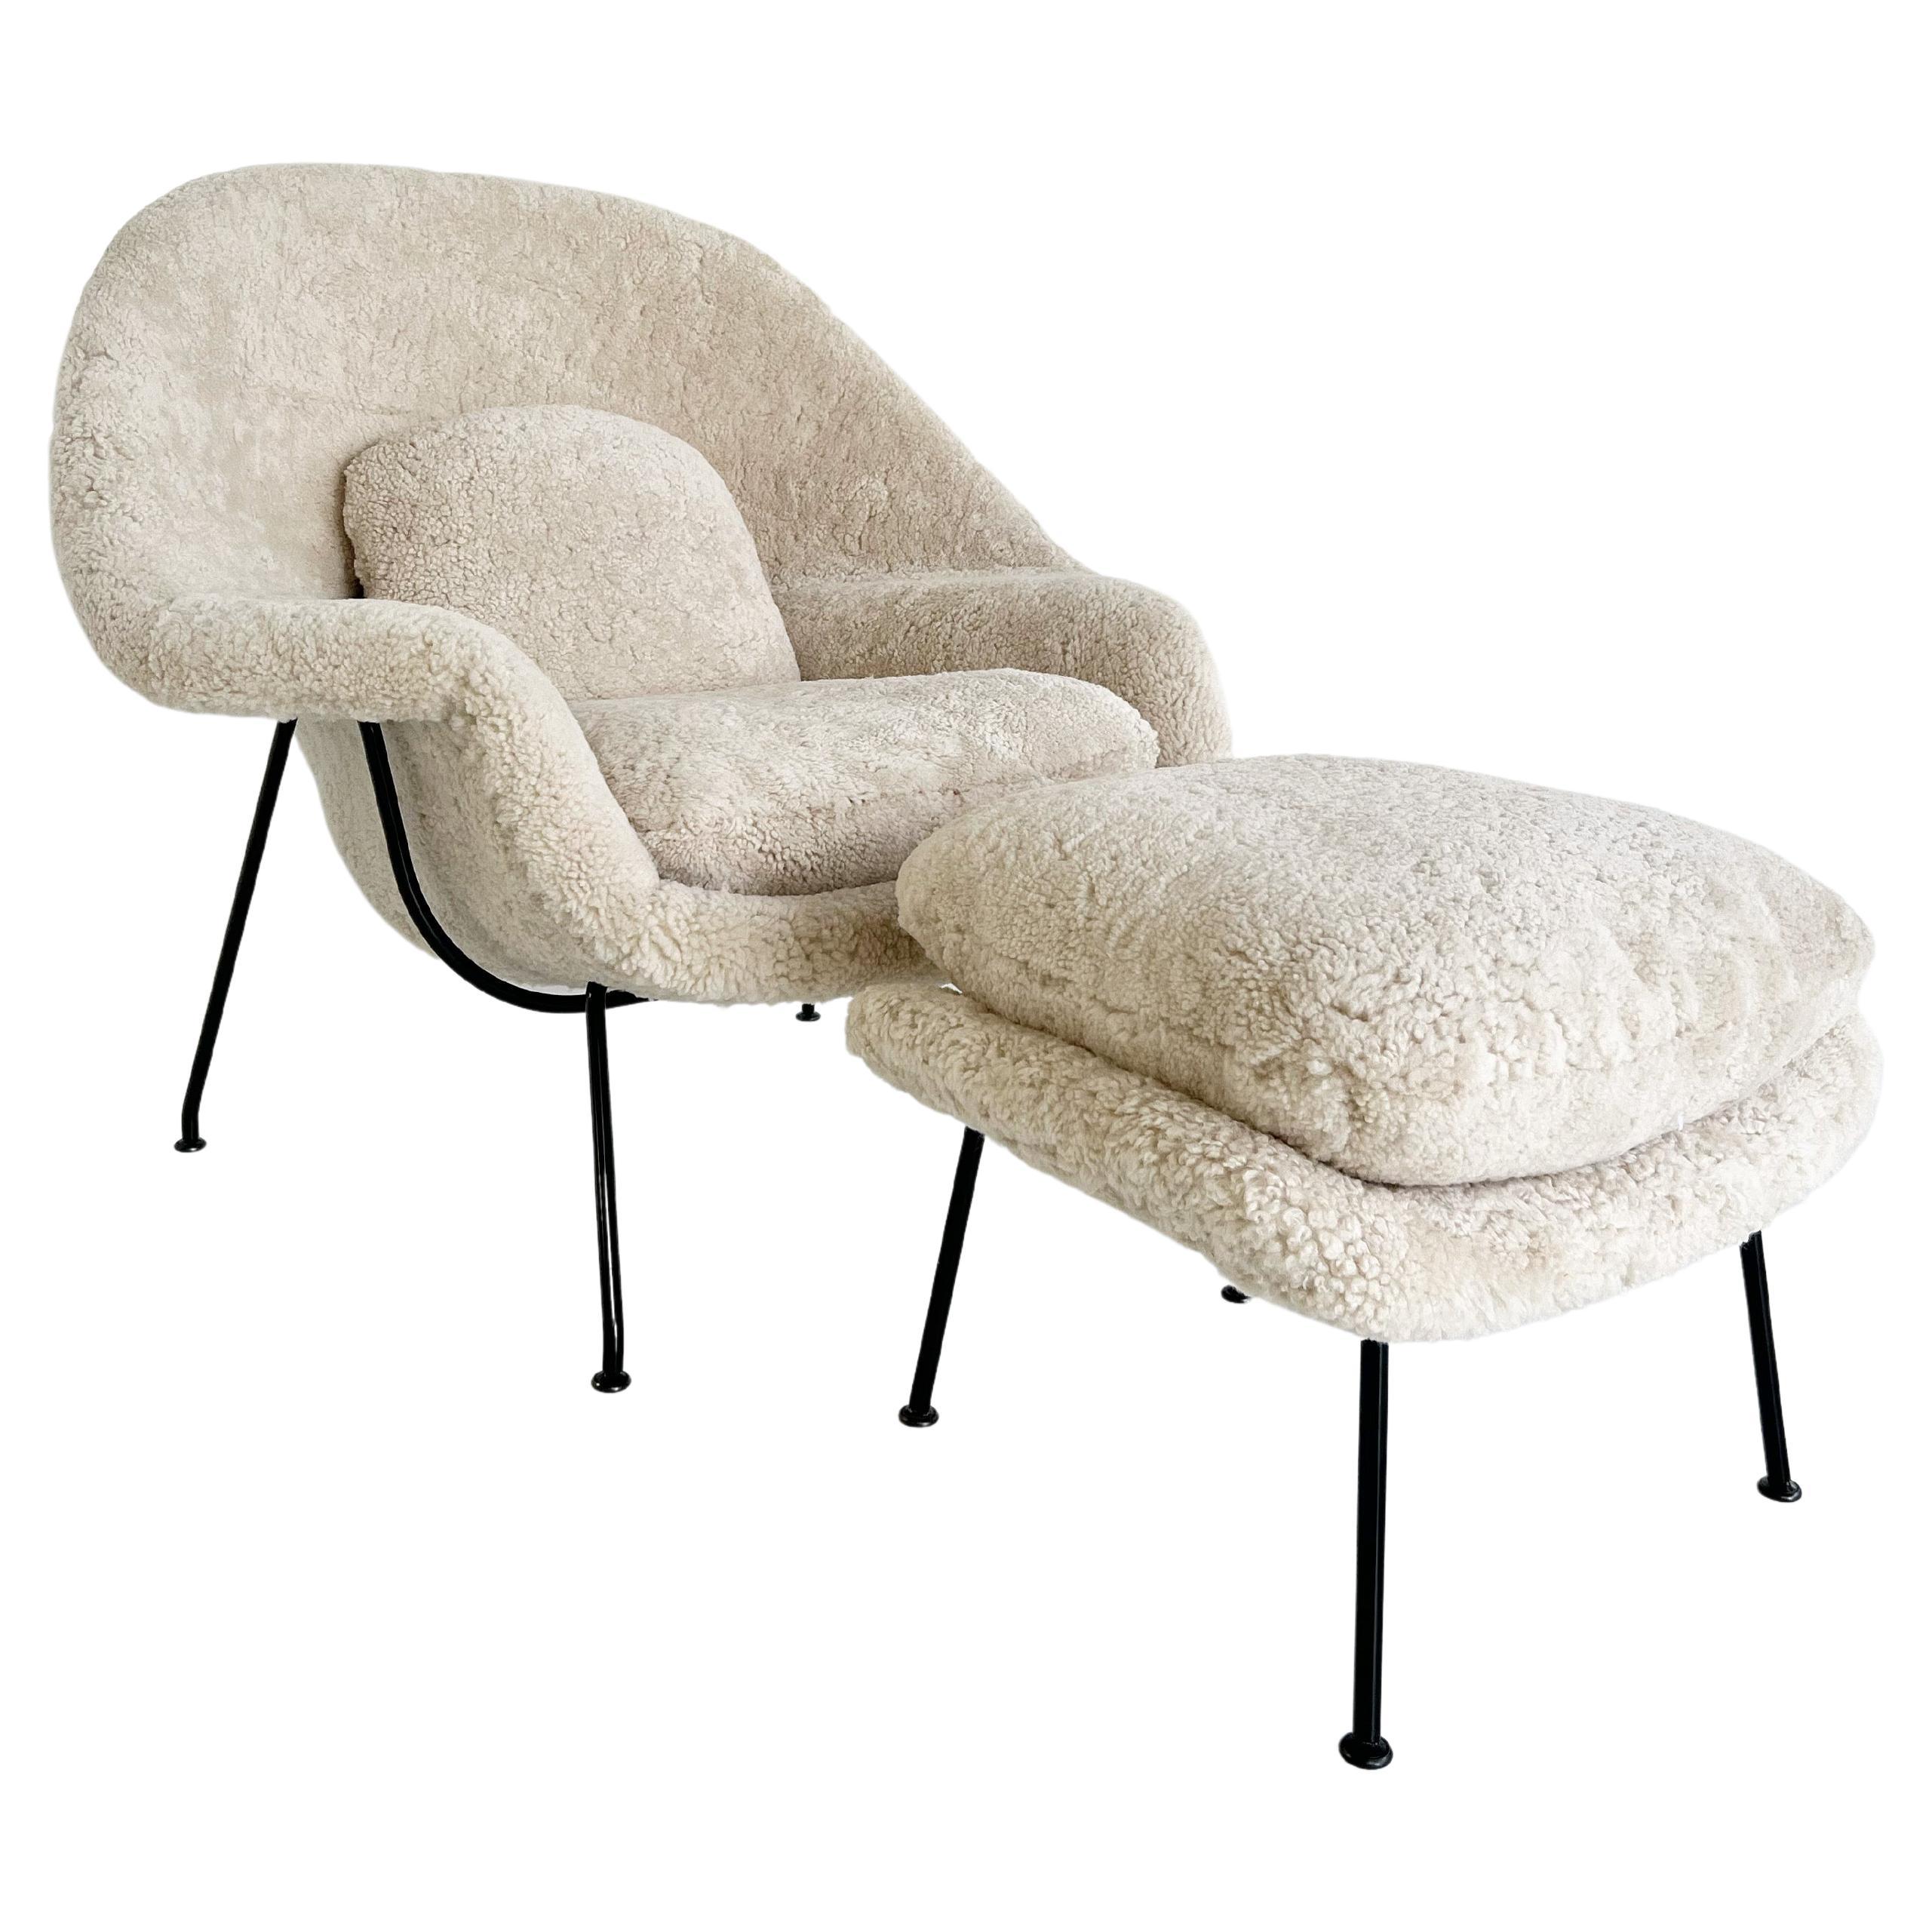 Forsyth Bespoke Eero Saarinen Womb Chair and Ottoman in Shearling